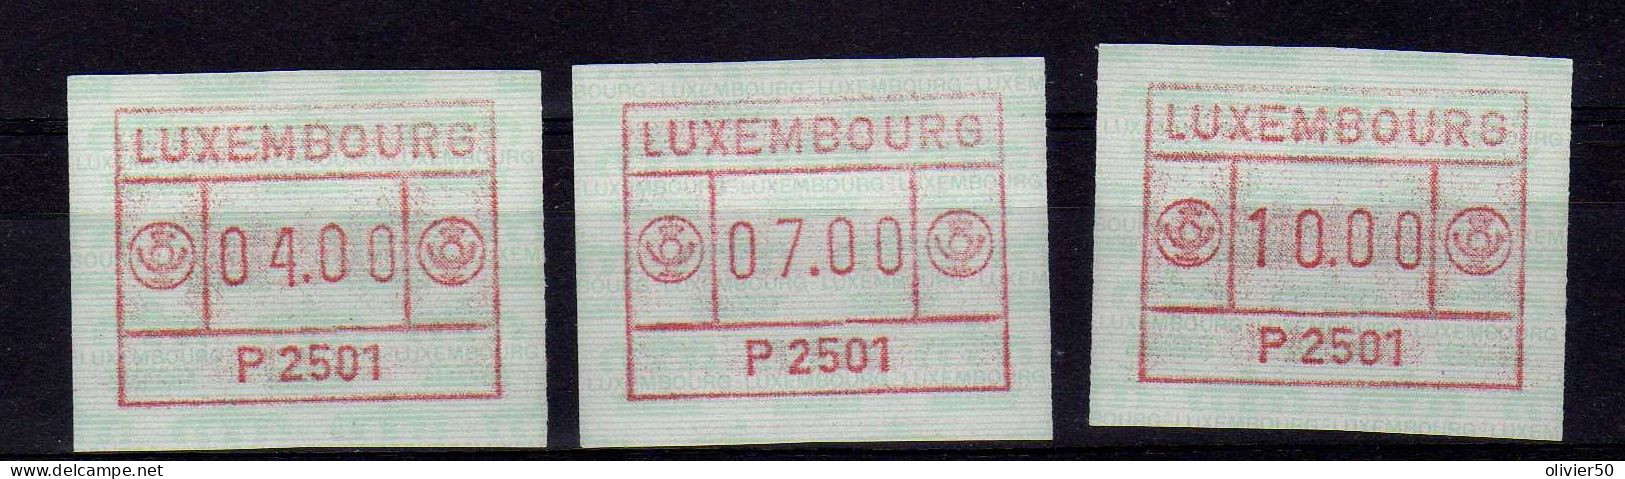 Luxembourg (1983) -  3 Timbres De Distributeur -  Neufs** - MNH - Frankeervignetten